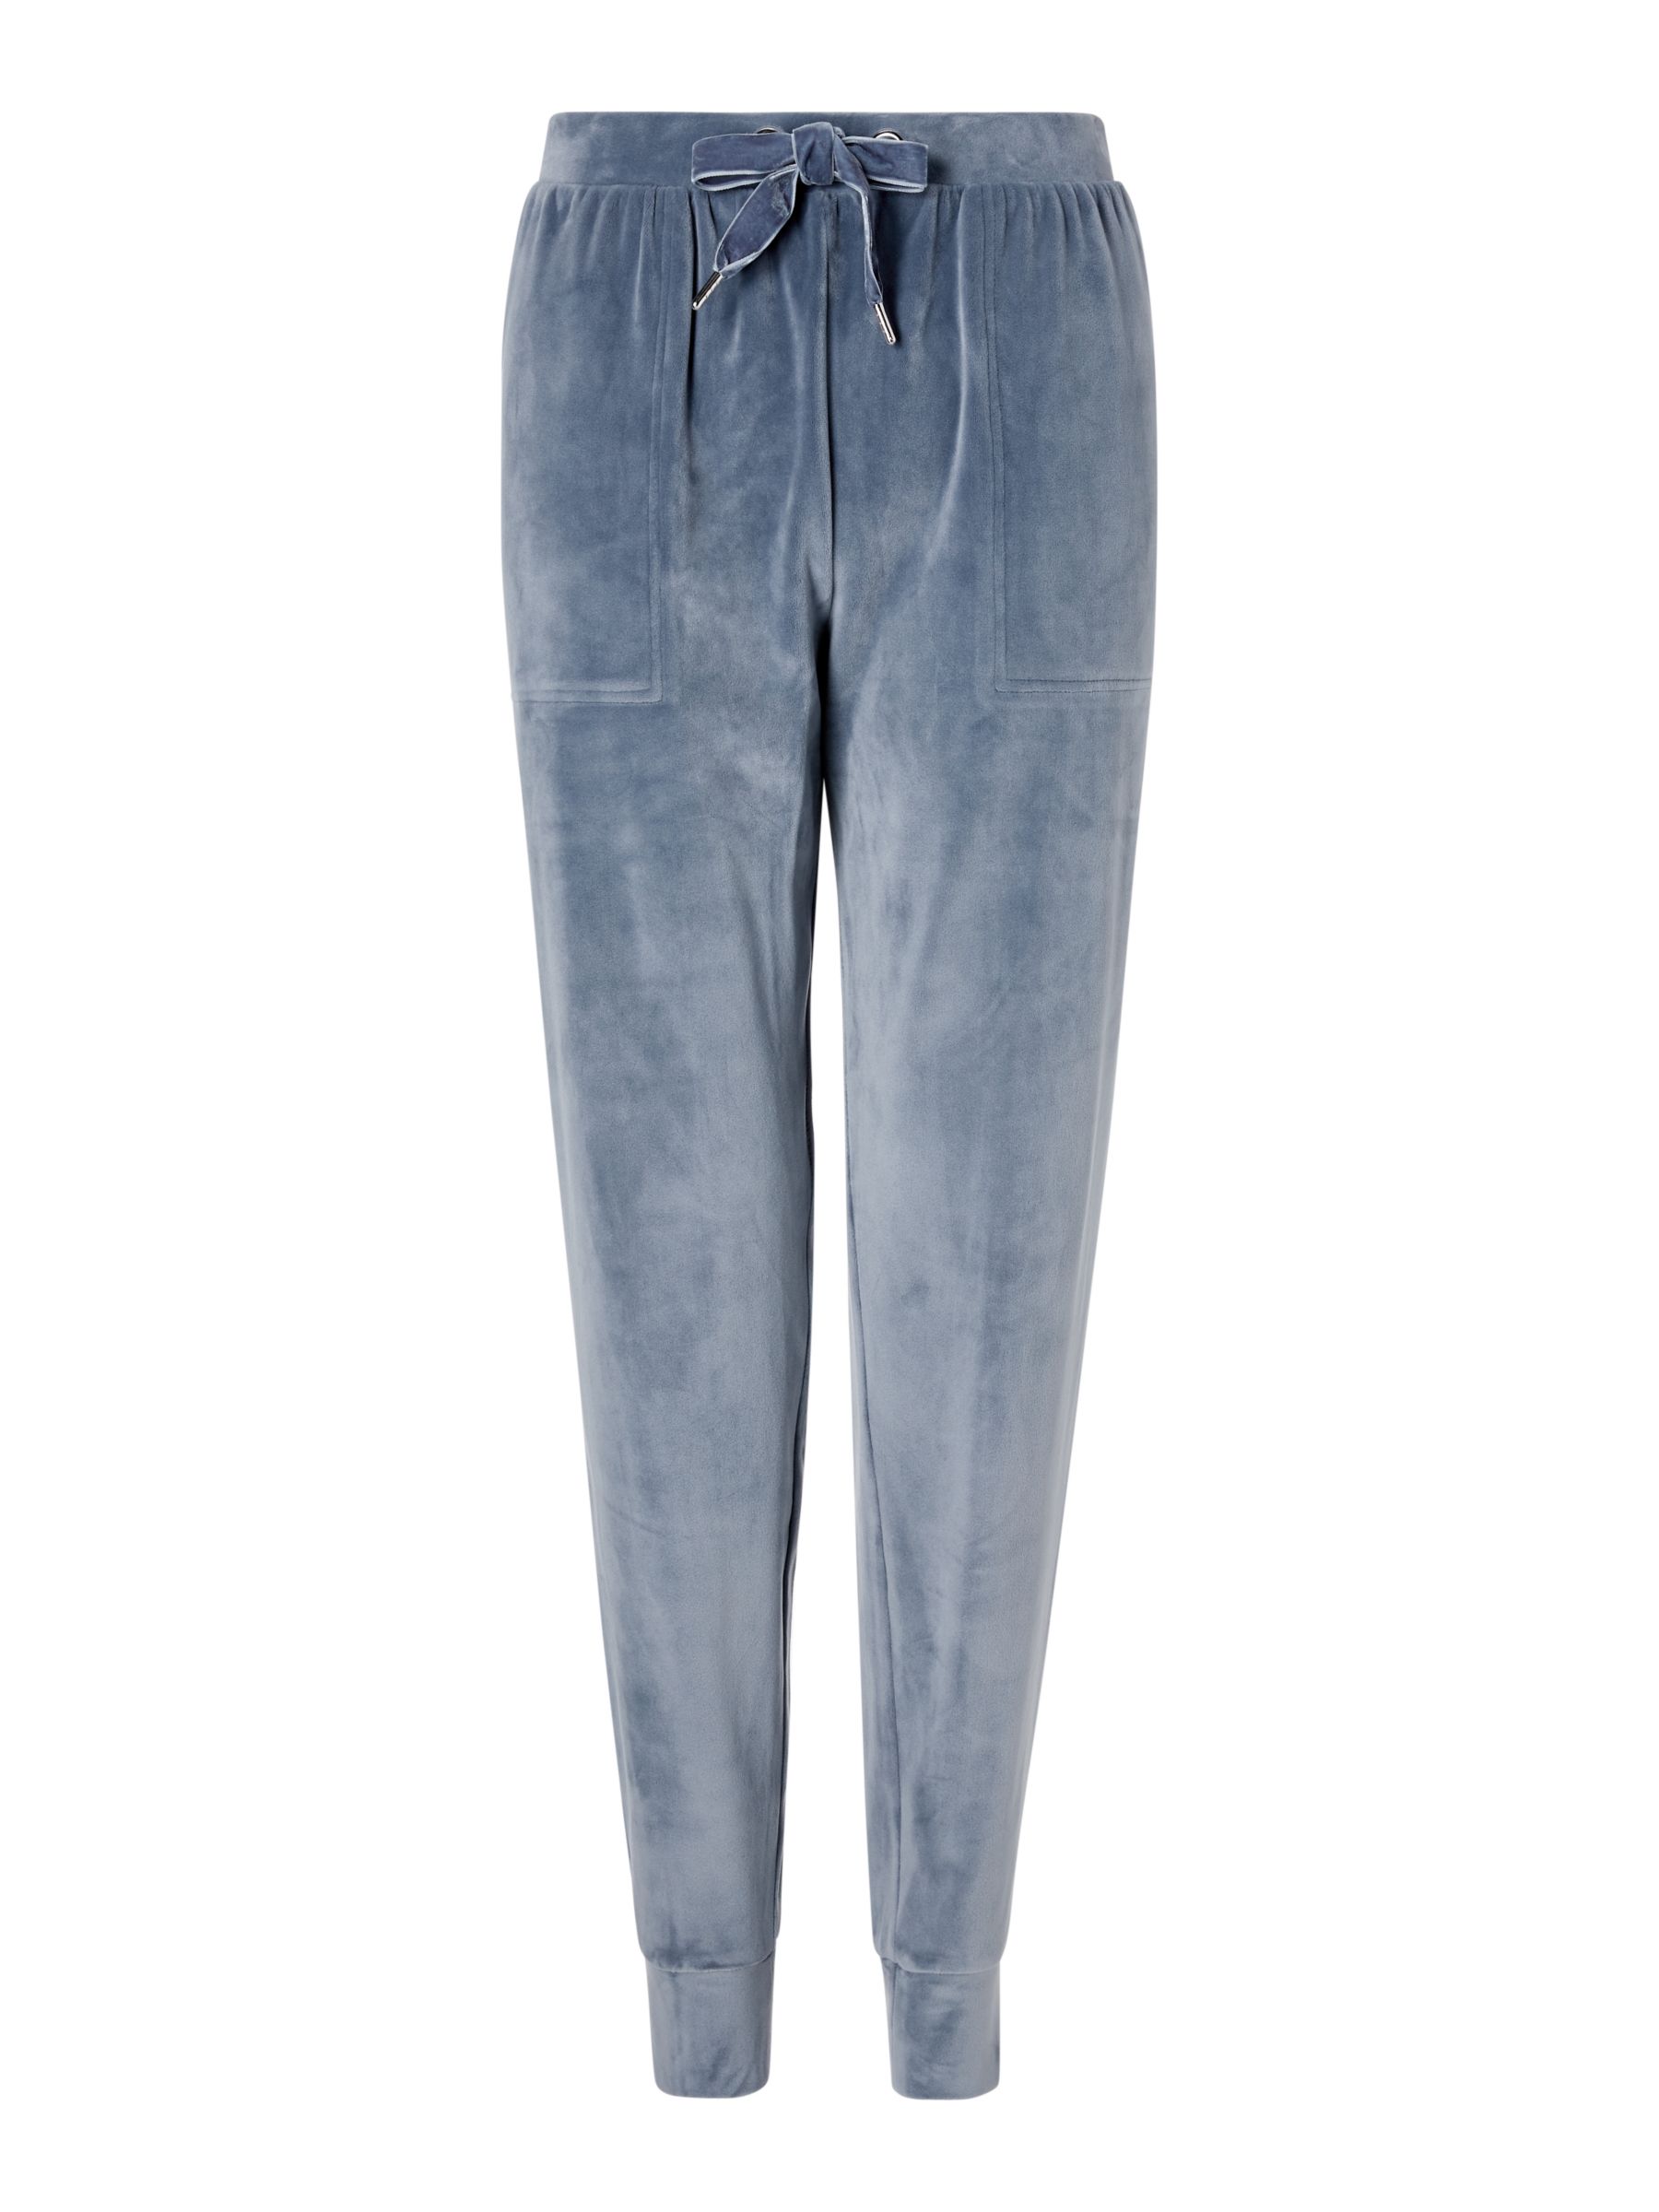 John Lewis Cleo Velour Jogger Lounge Pants, Blue Grey, 6